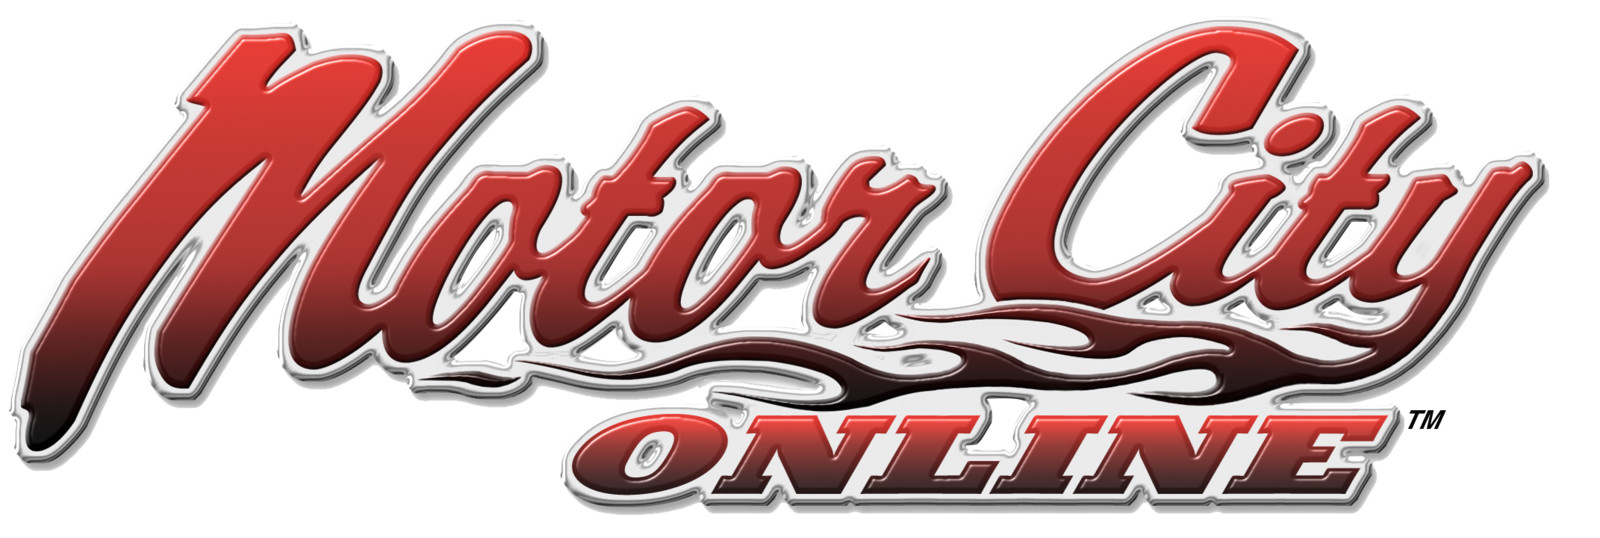 Motorcity Online (Online NFS Spinoff) - Logotype (Original)